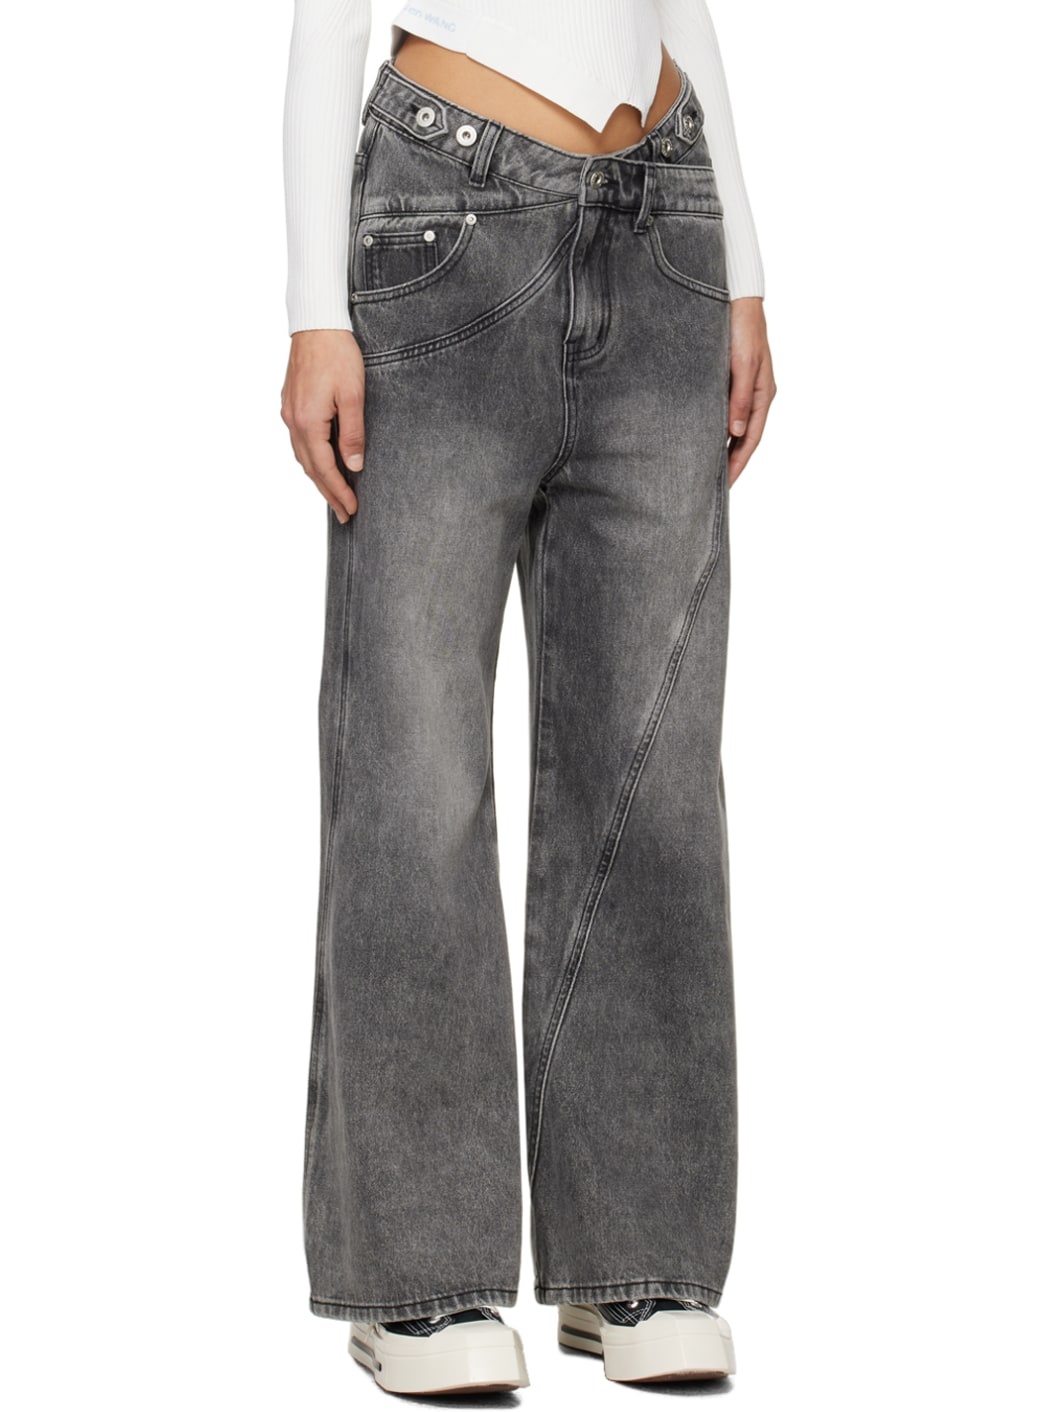 Gray Cross Waistband Jeans - 2